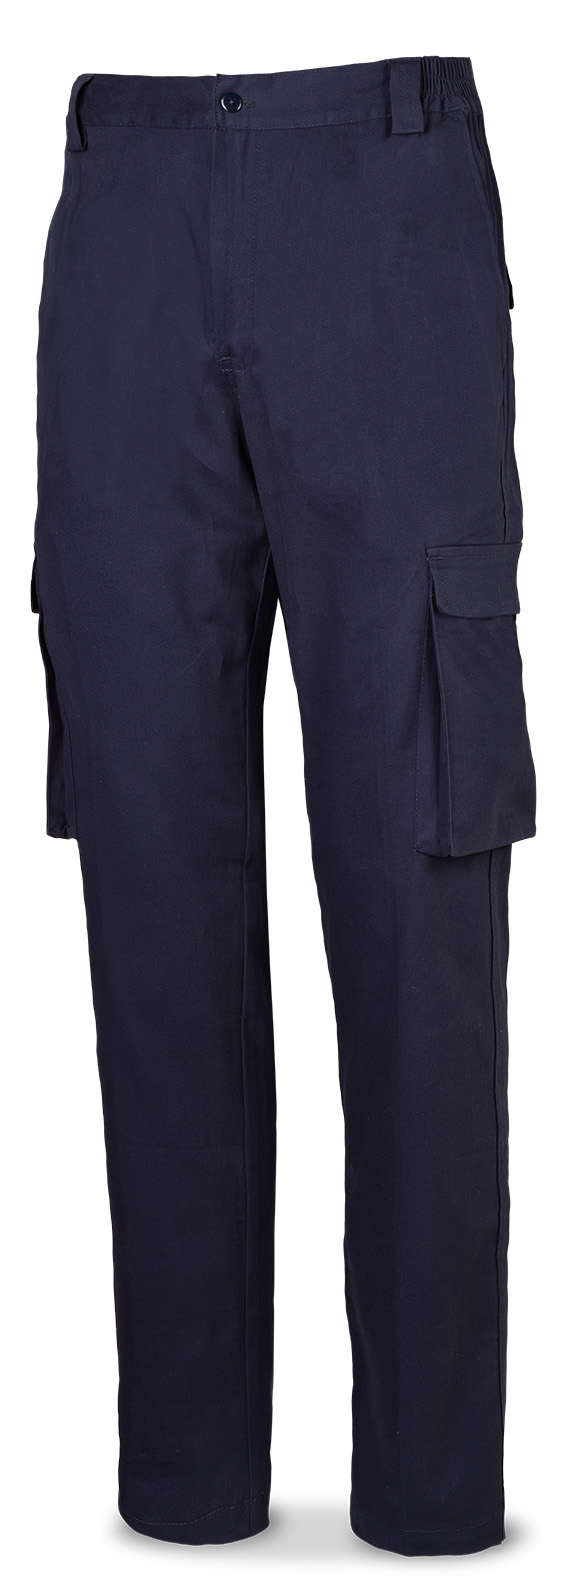 588-PBSA Workwear Casual Series Basic Stretch Pant